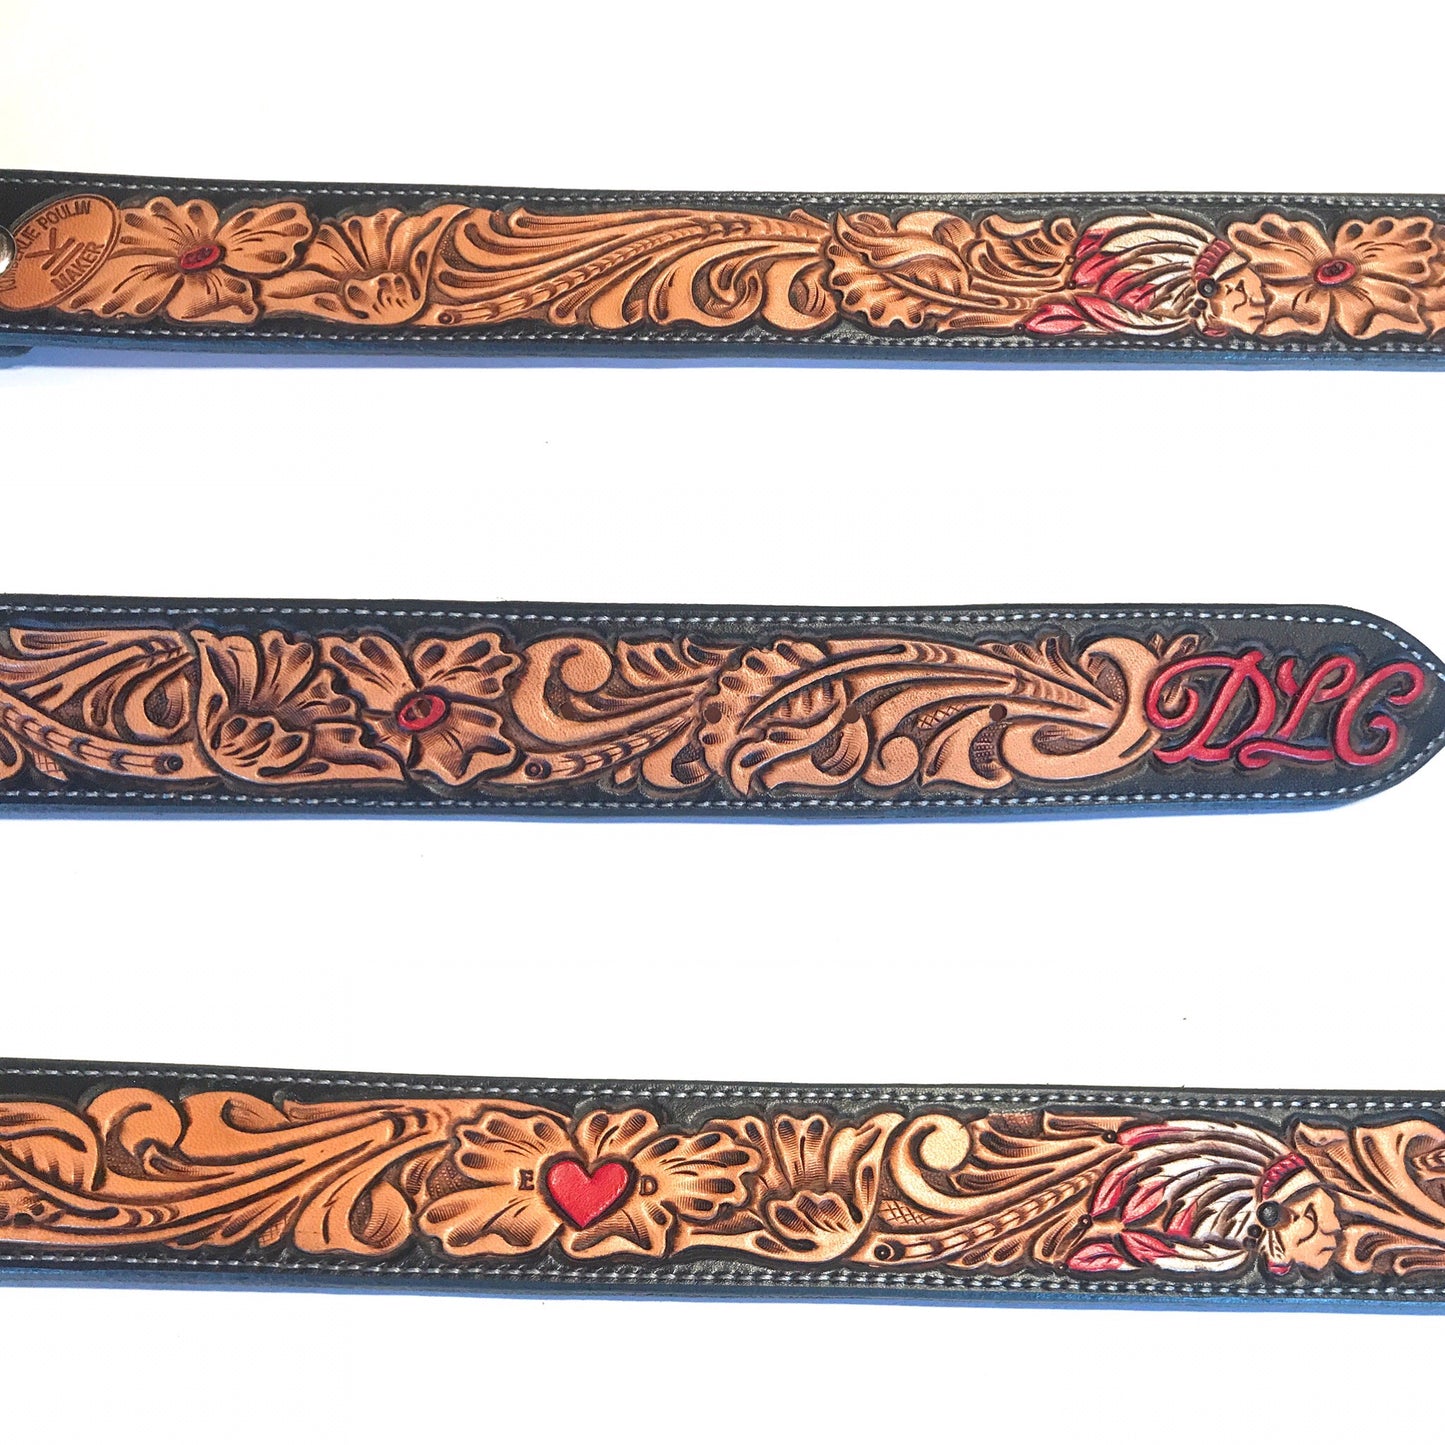 Custom tooled ADULT belt size 26-46